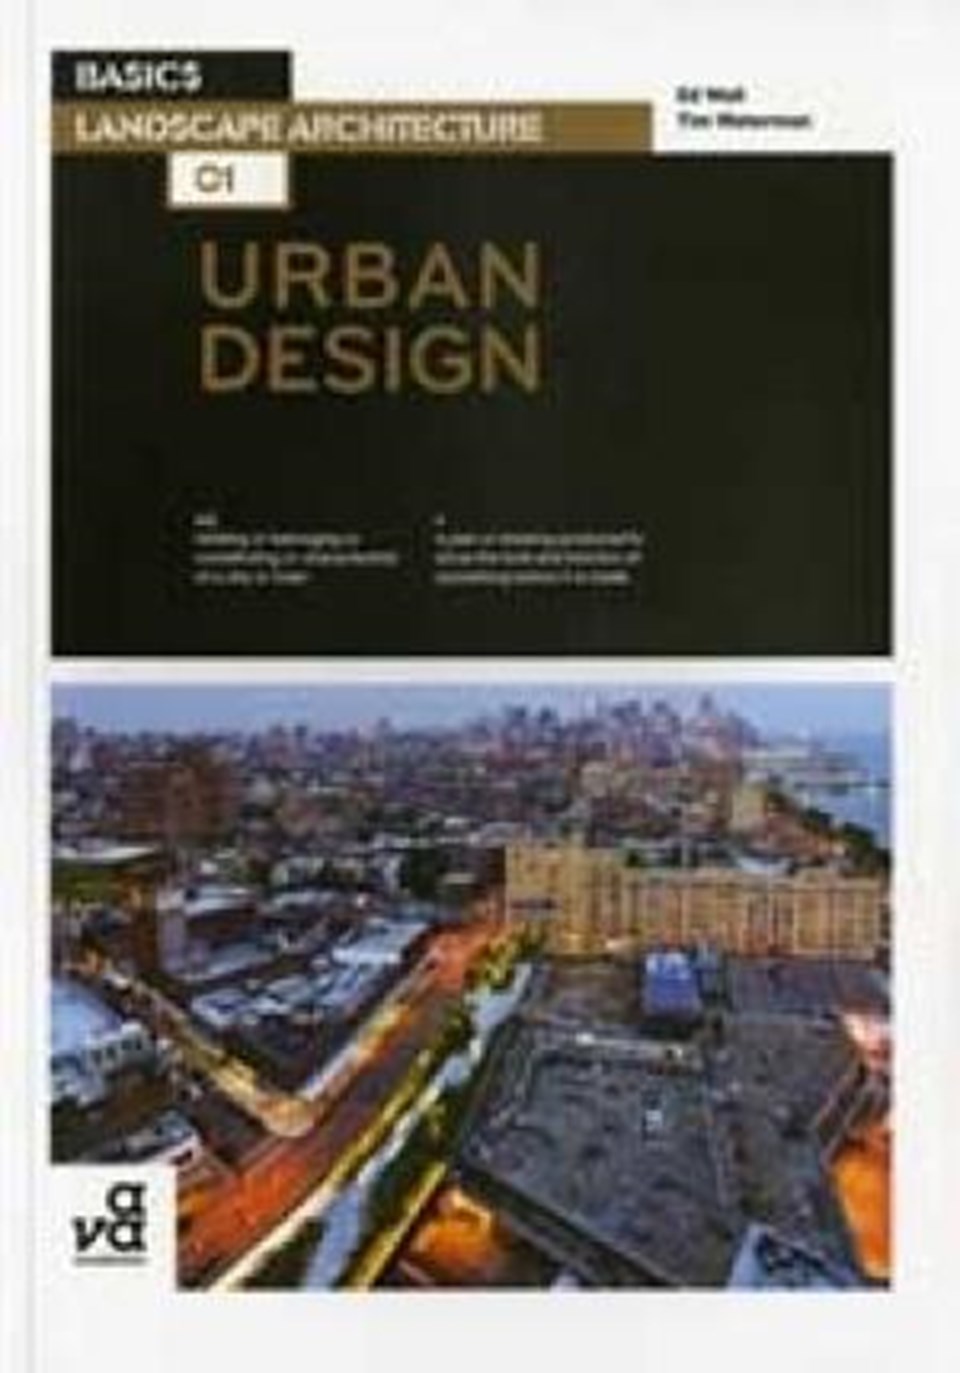 Basics Landscape Architecture - Urban Design